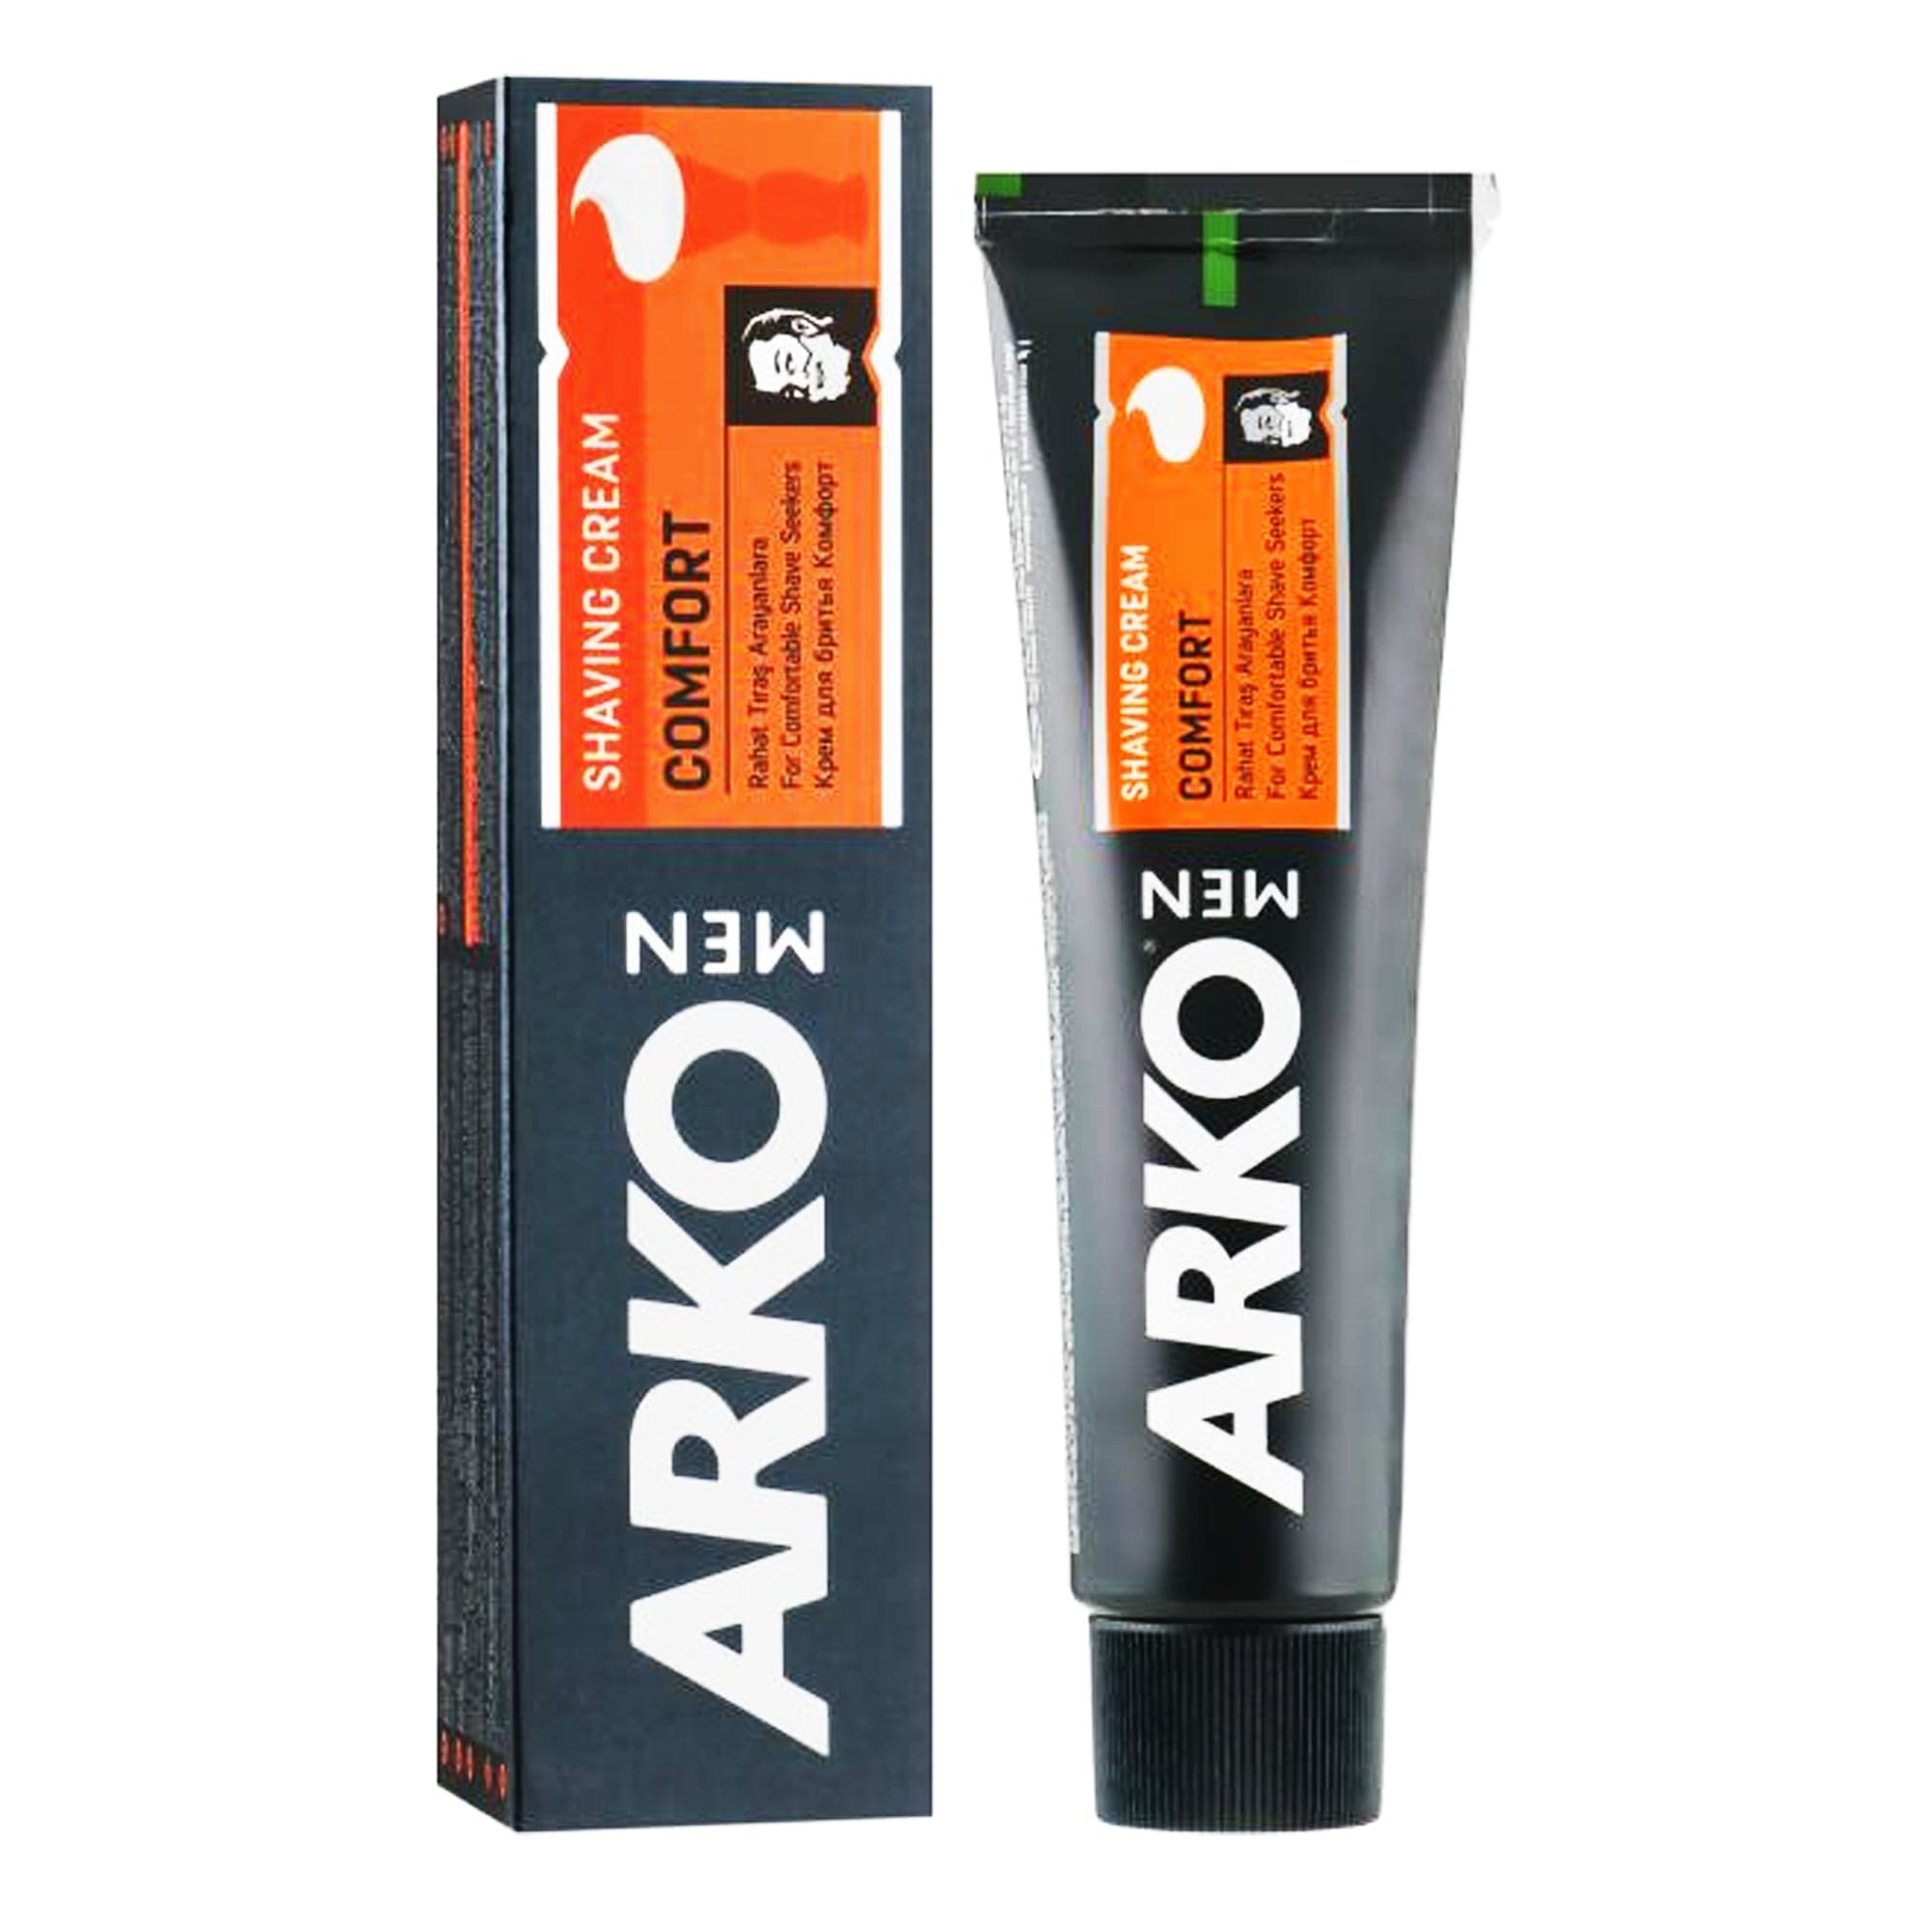 Arko - Men Shaving Cream Comfort 100g